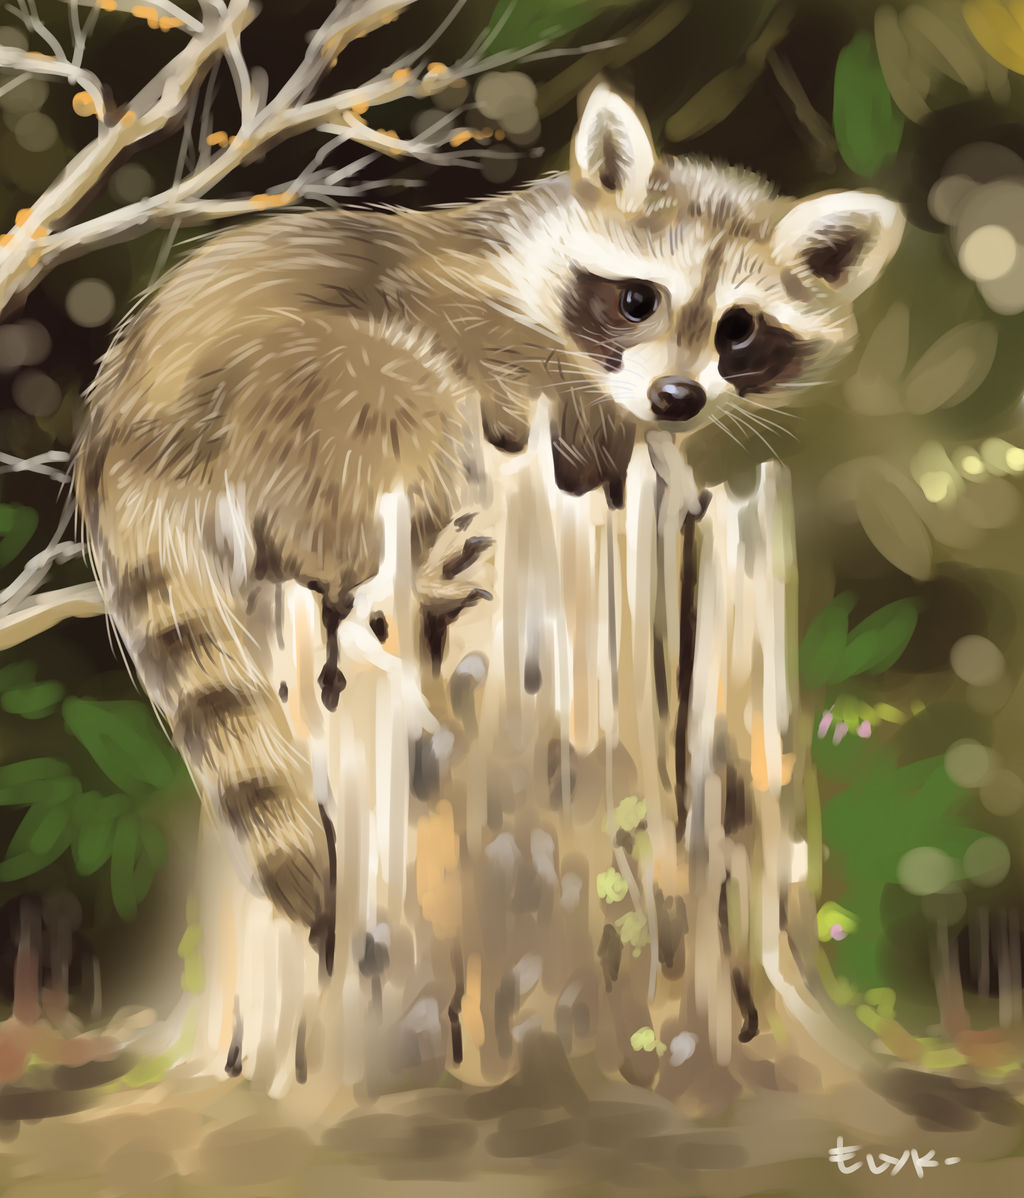 Raccoon by Art-of-Kyle-Tristan on DeviantArt